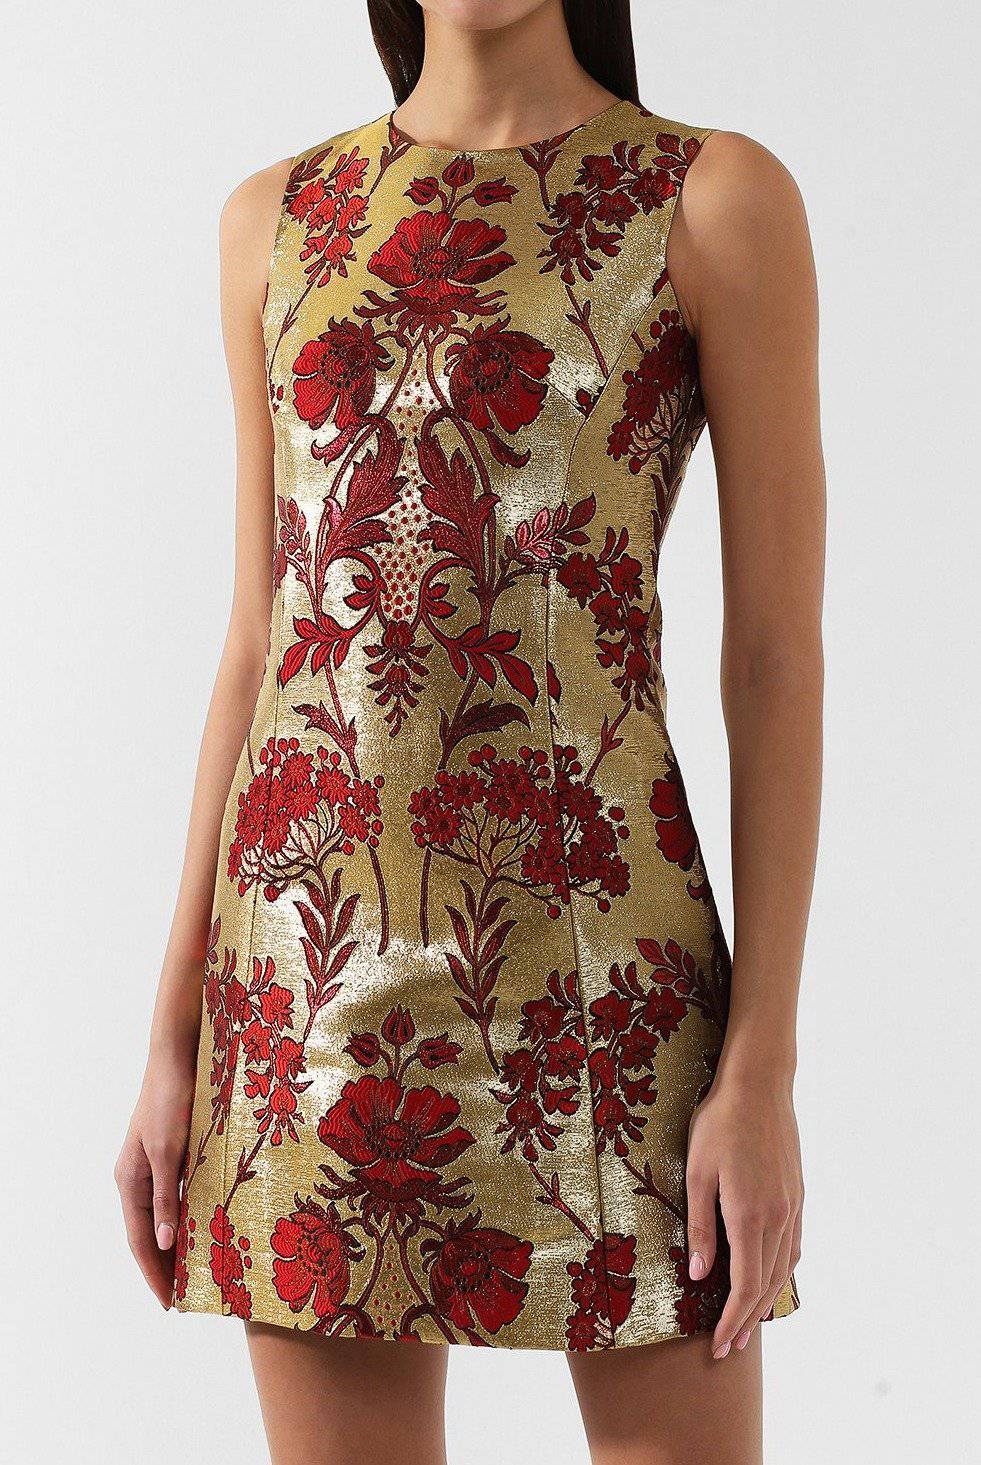 Dolce & Gabbana Jacquard Floral Mini Dress